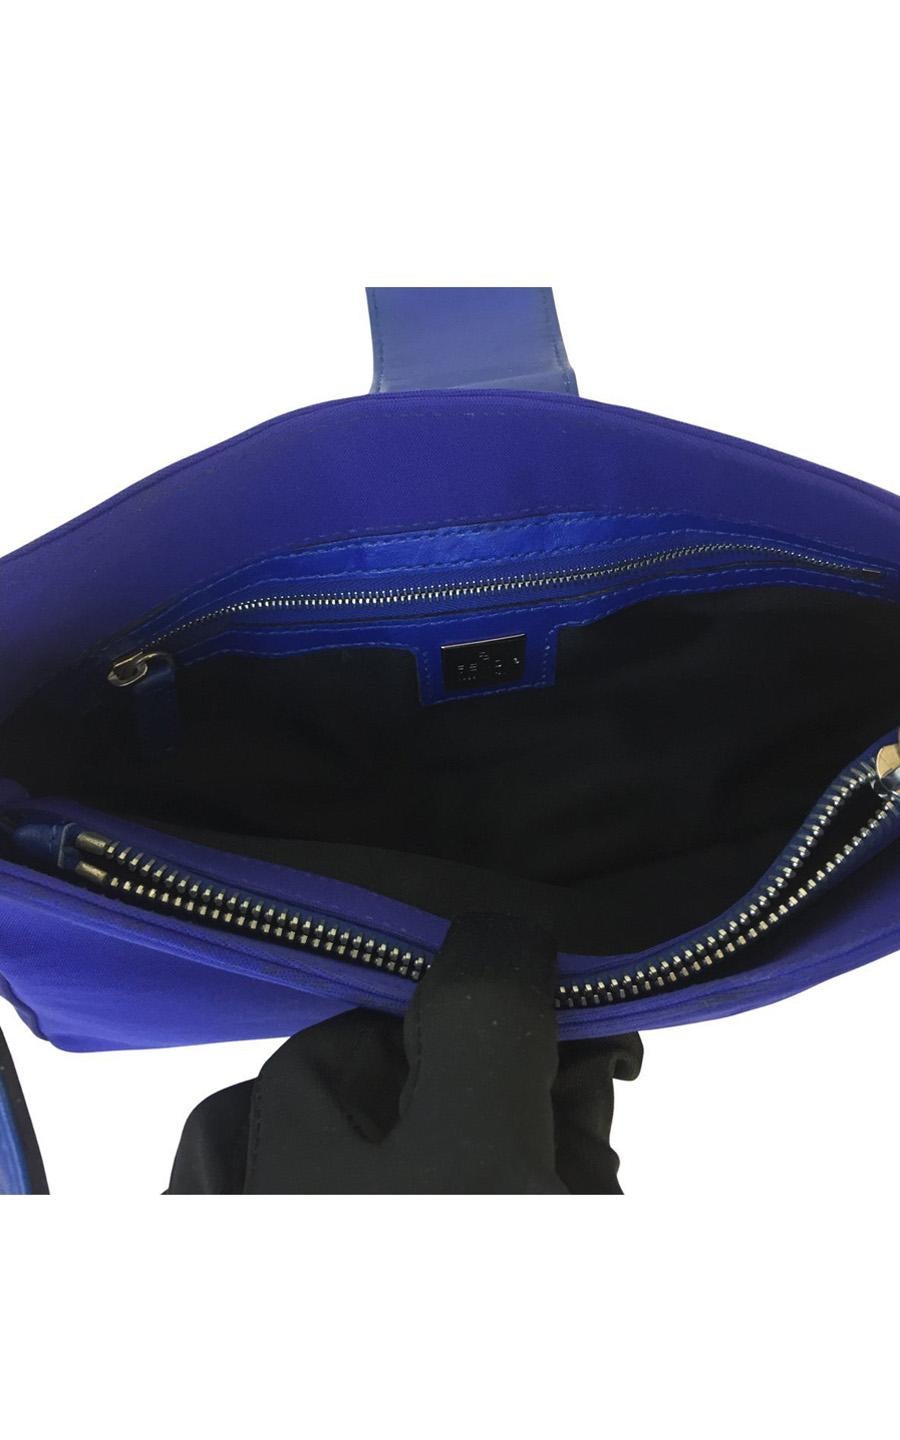 Vintage Fendi Shoulder Bag Cloth in blue color with silver hardware In Excellent Condition For Sale In Paris, FR